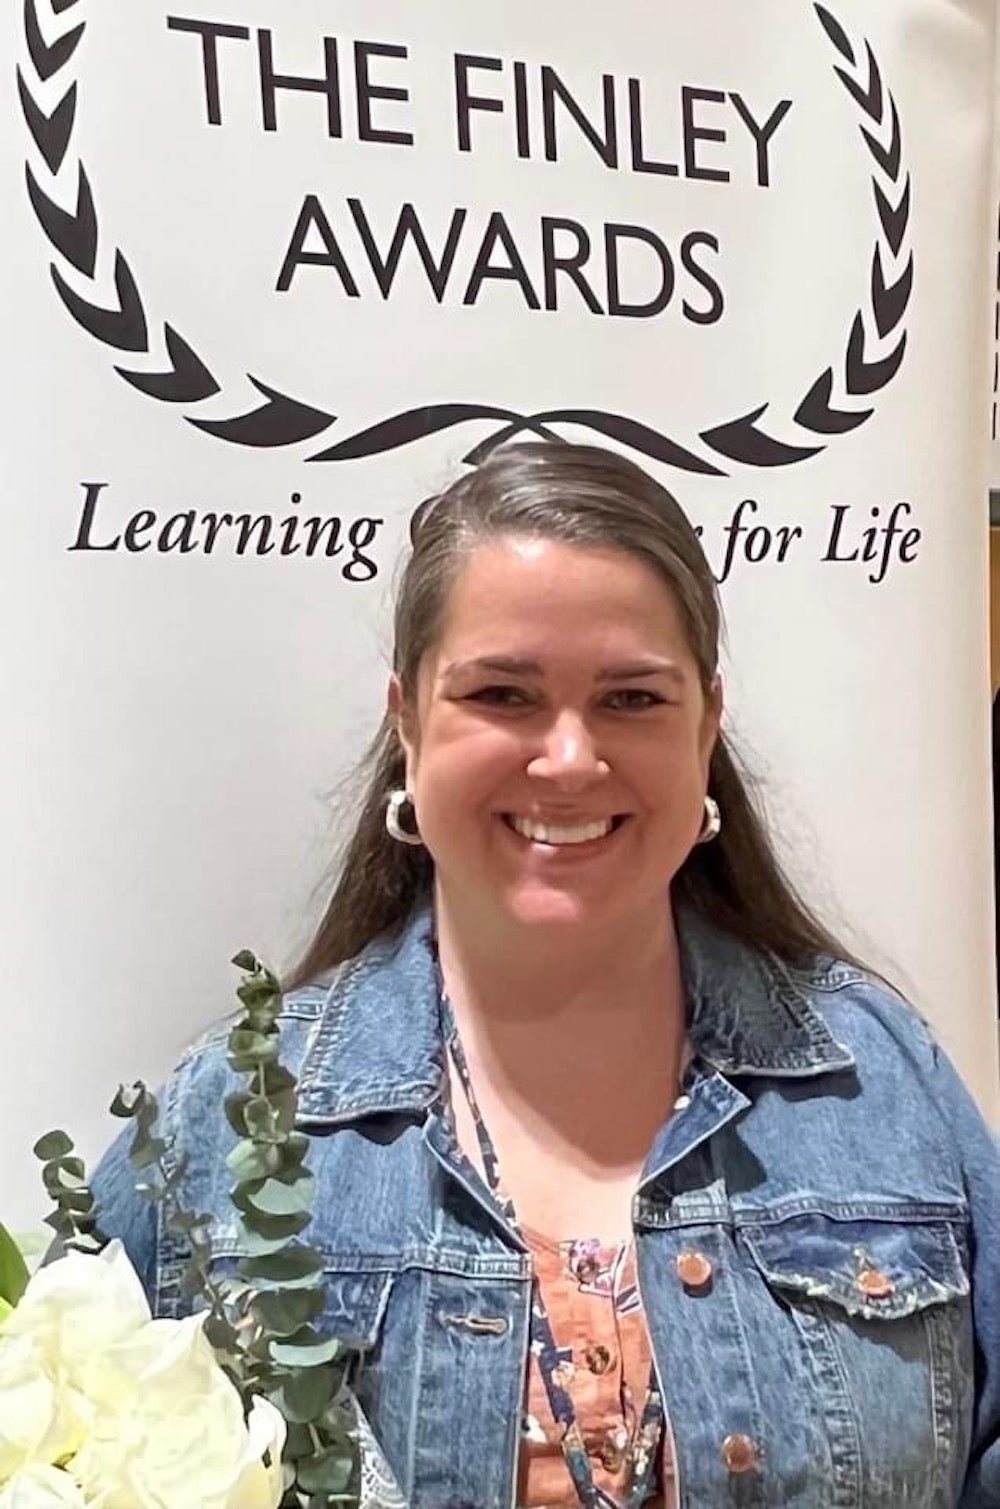 Five Questions For Jennifer Smith, a Hoover City Schools’ Finley Award Recipient